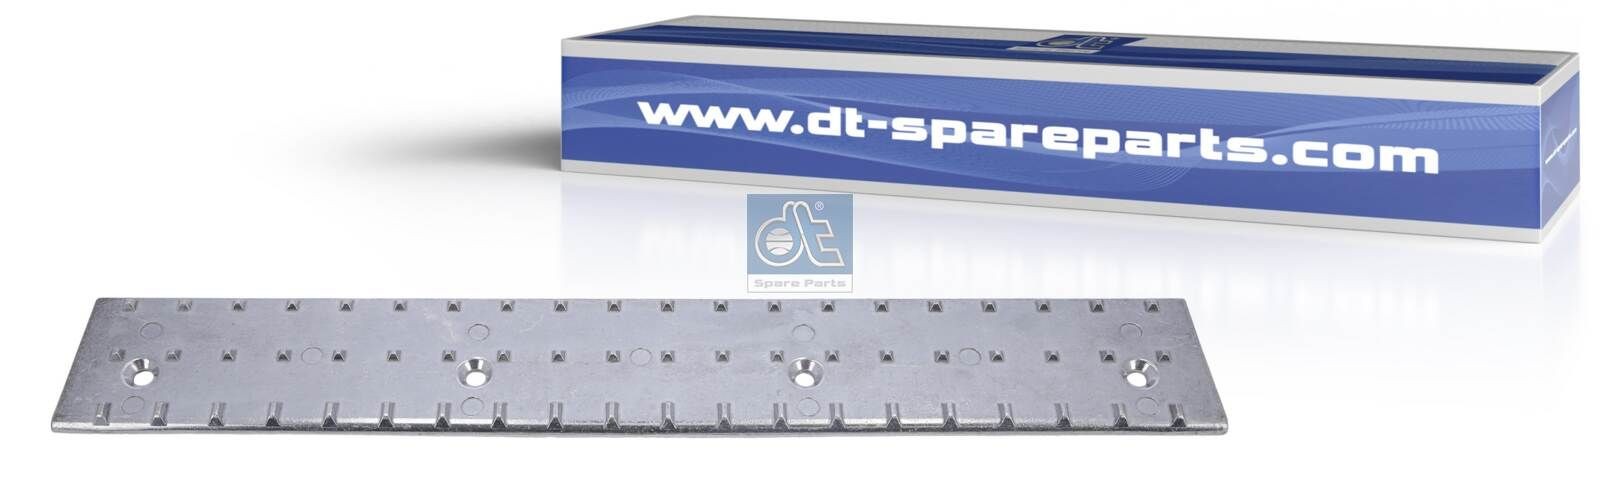 5.16094 DT Spare Parts Trittbrett DAF 95 XF